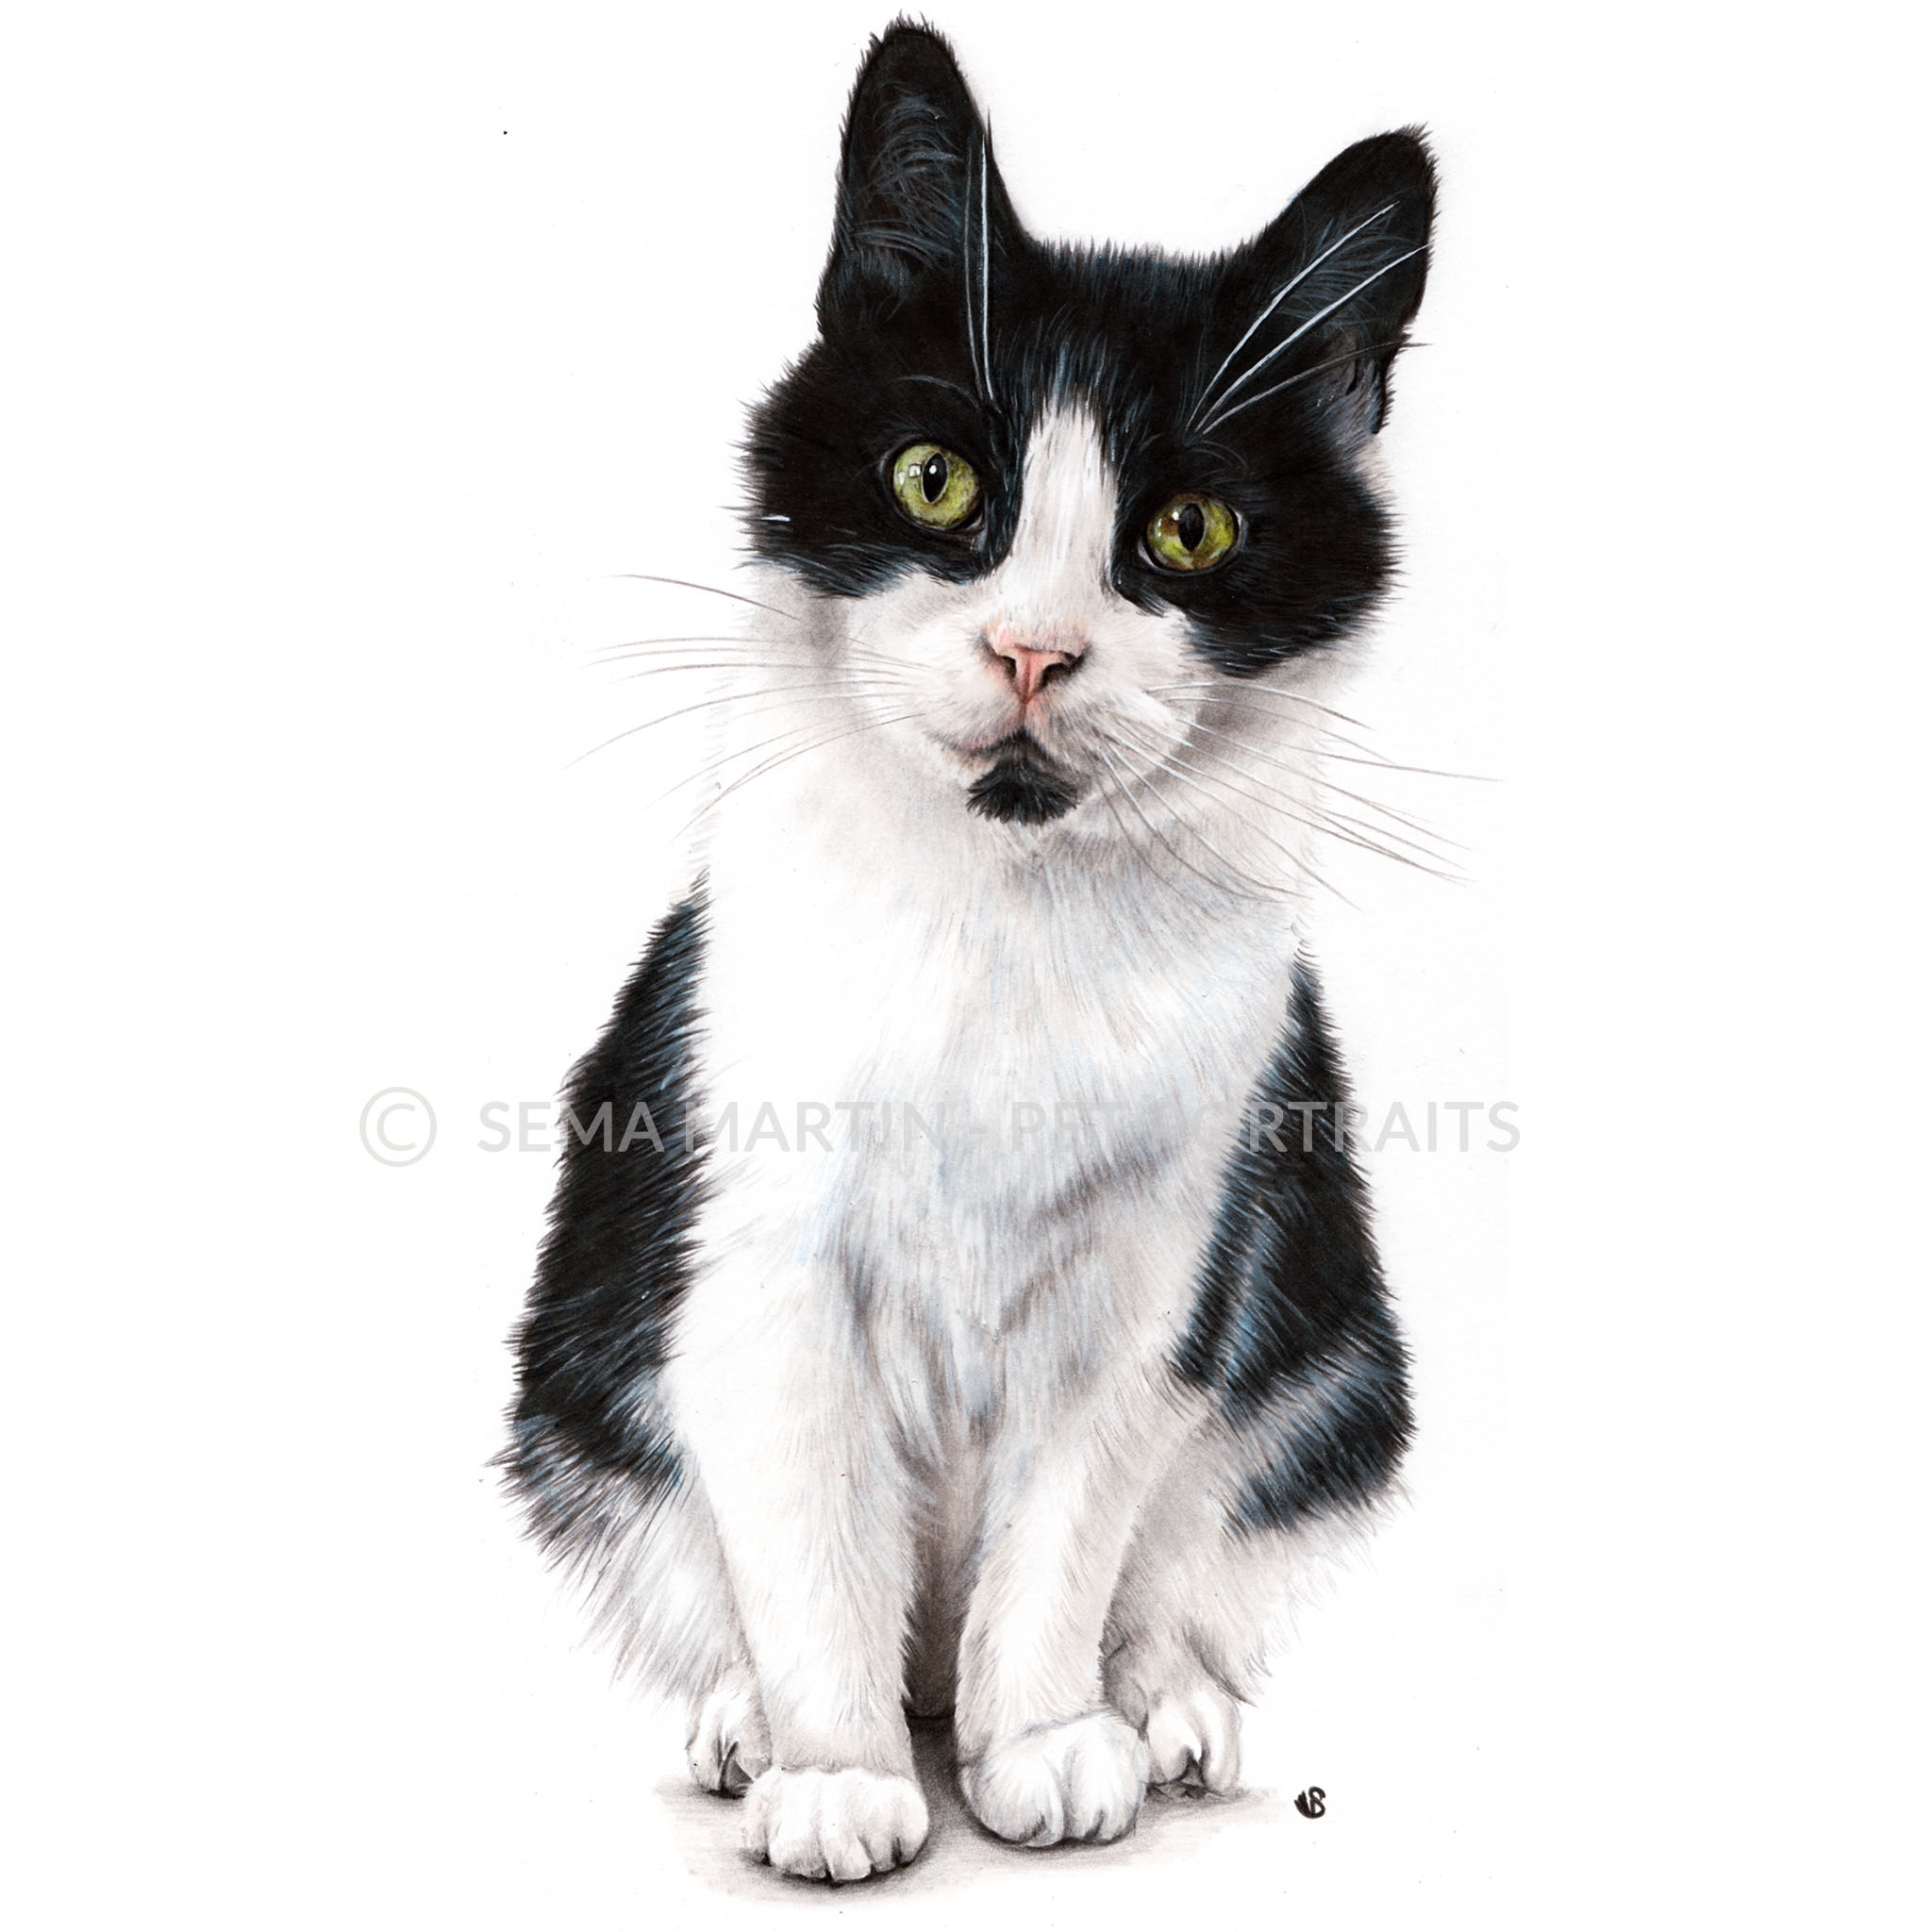 'Poppet' - UK, A4, black and white cat portrait